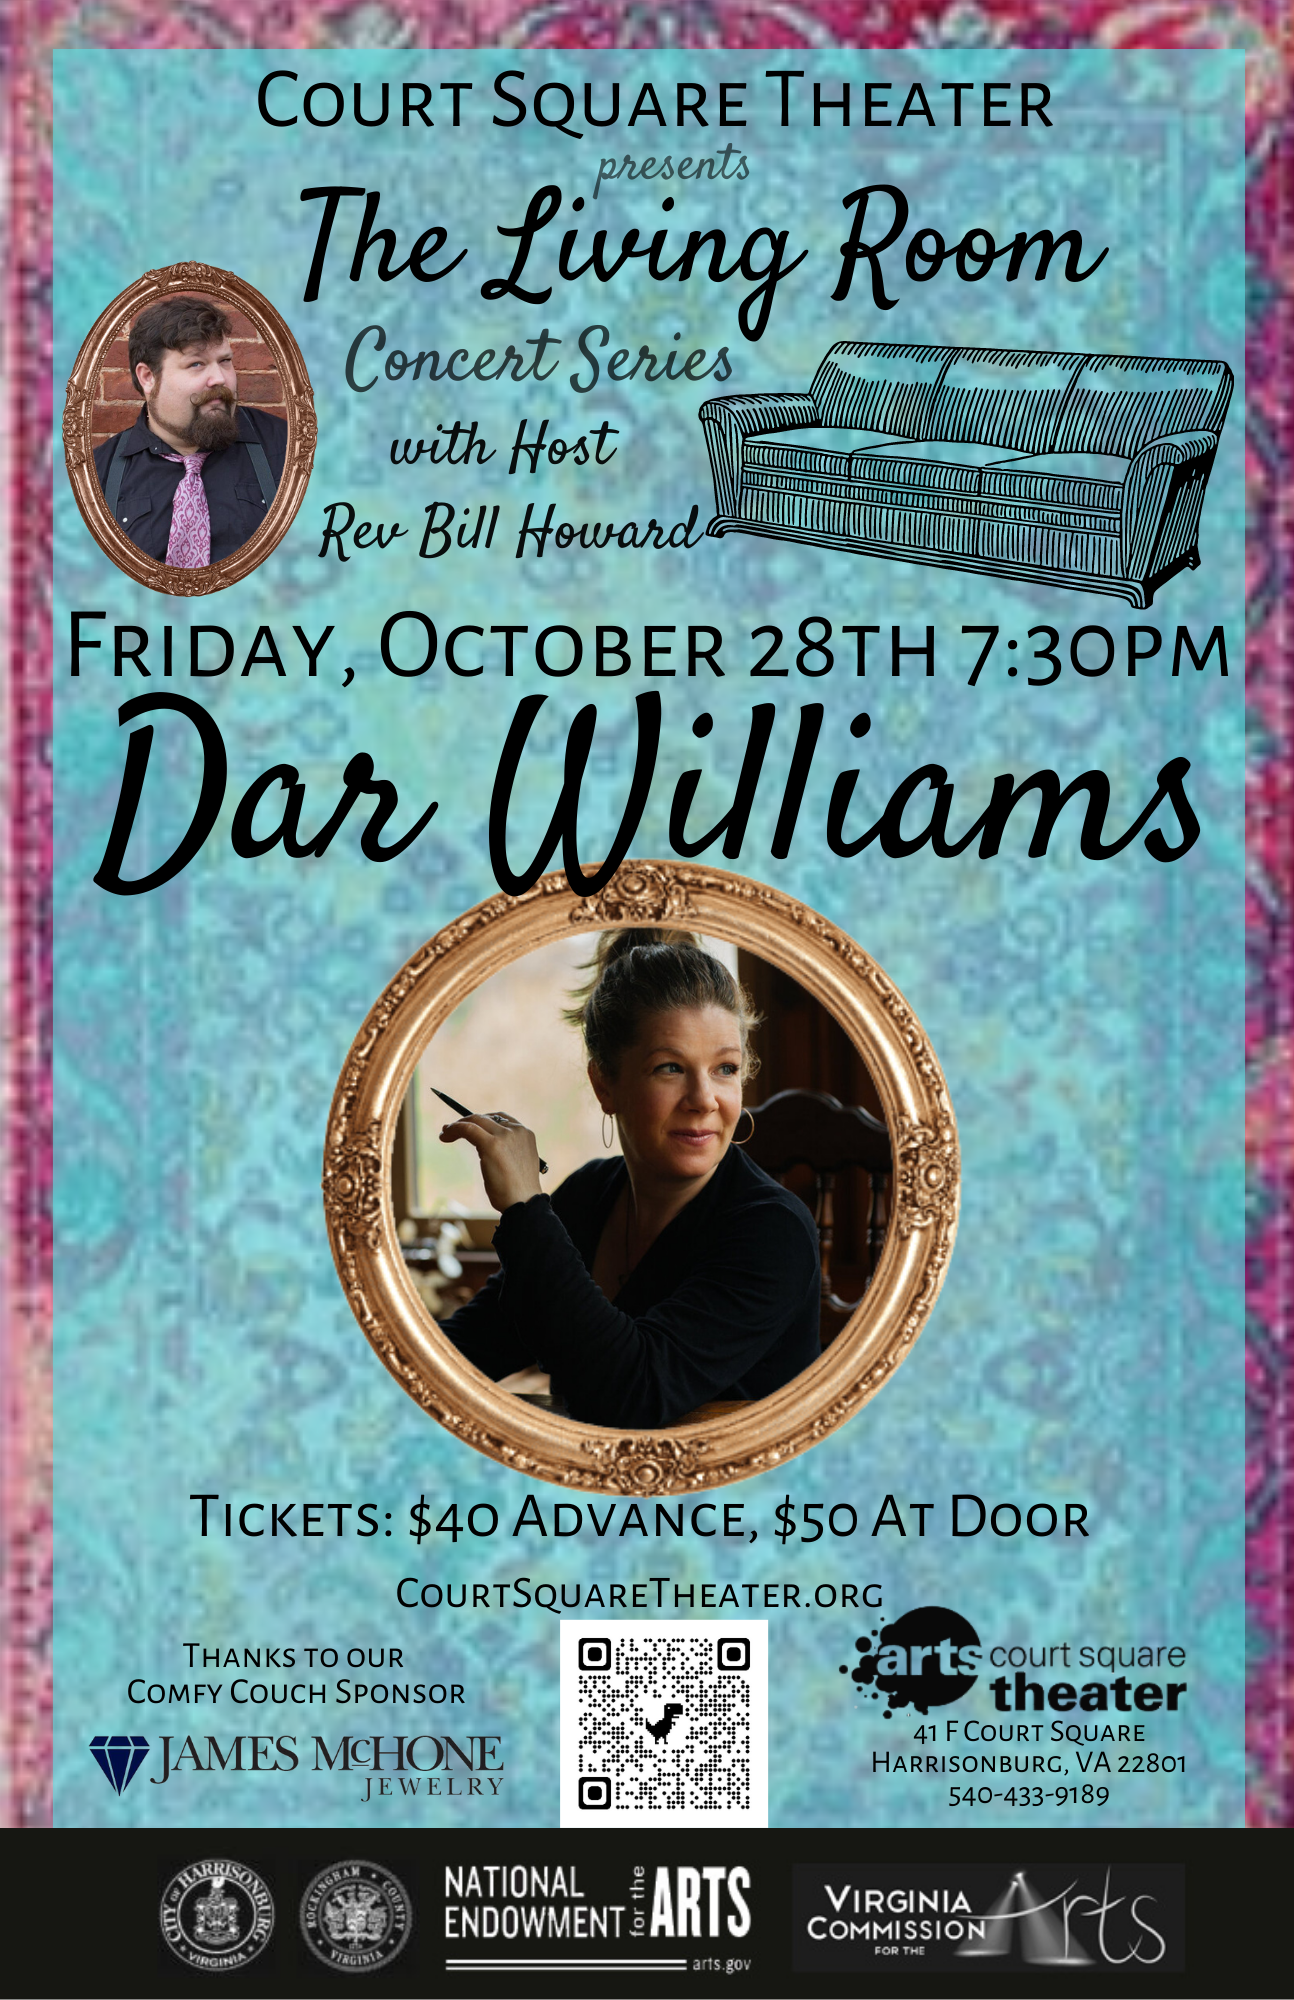 Dar Williams concert poster